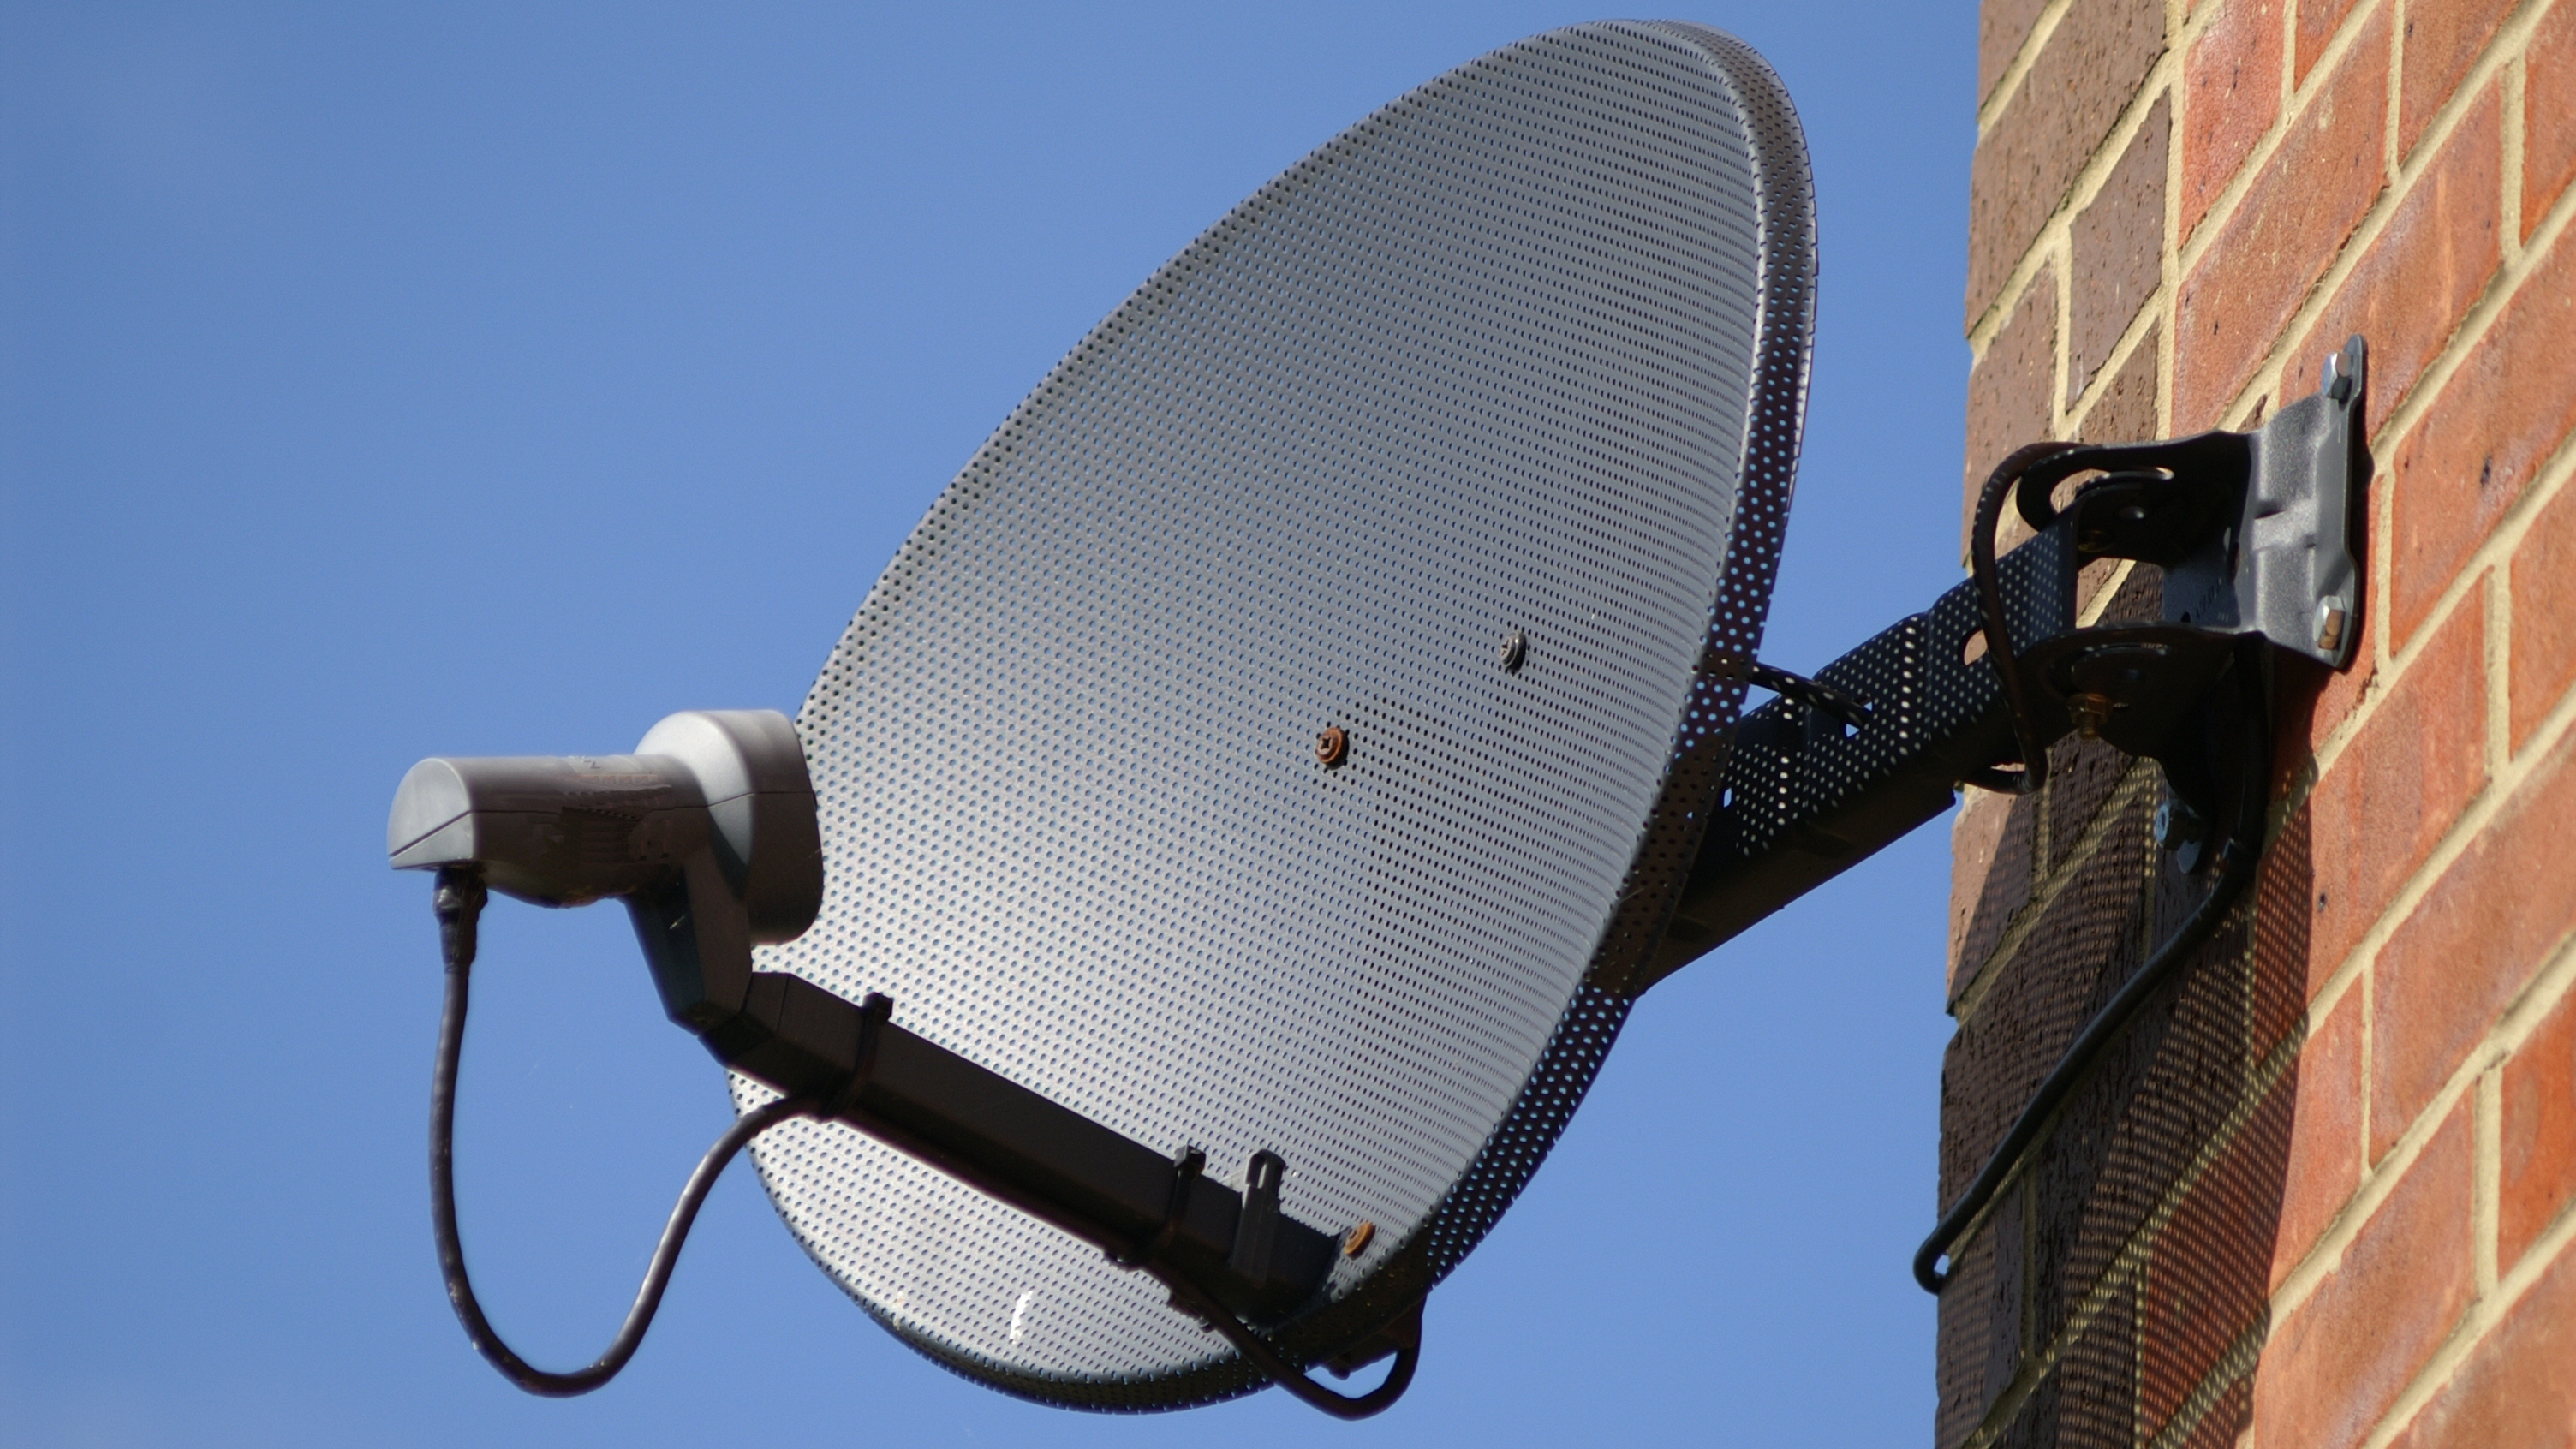 Спутниковая тарелка. Параболическая антенна. Большие спутниковые антенны. Спутниковая антенна для радиоприемника. Satellite dish